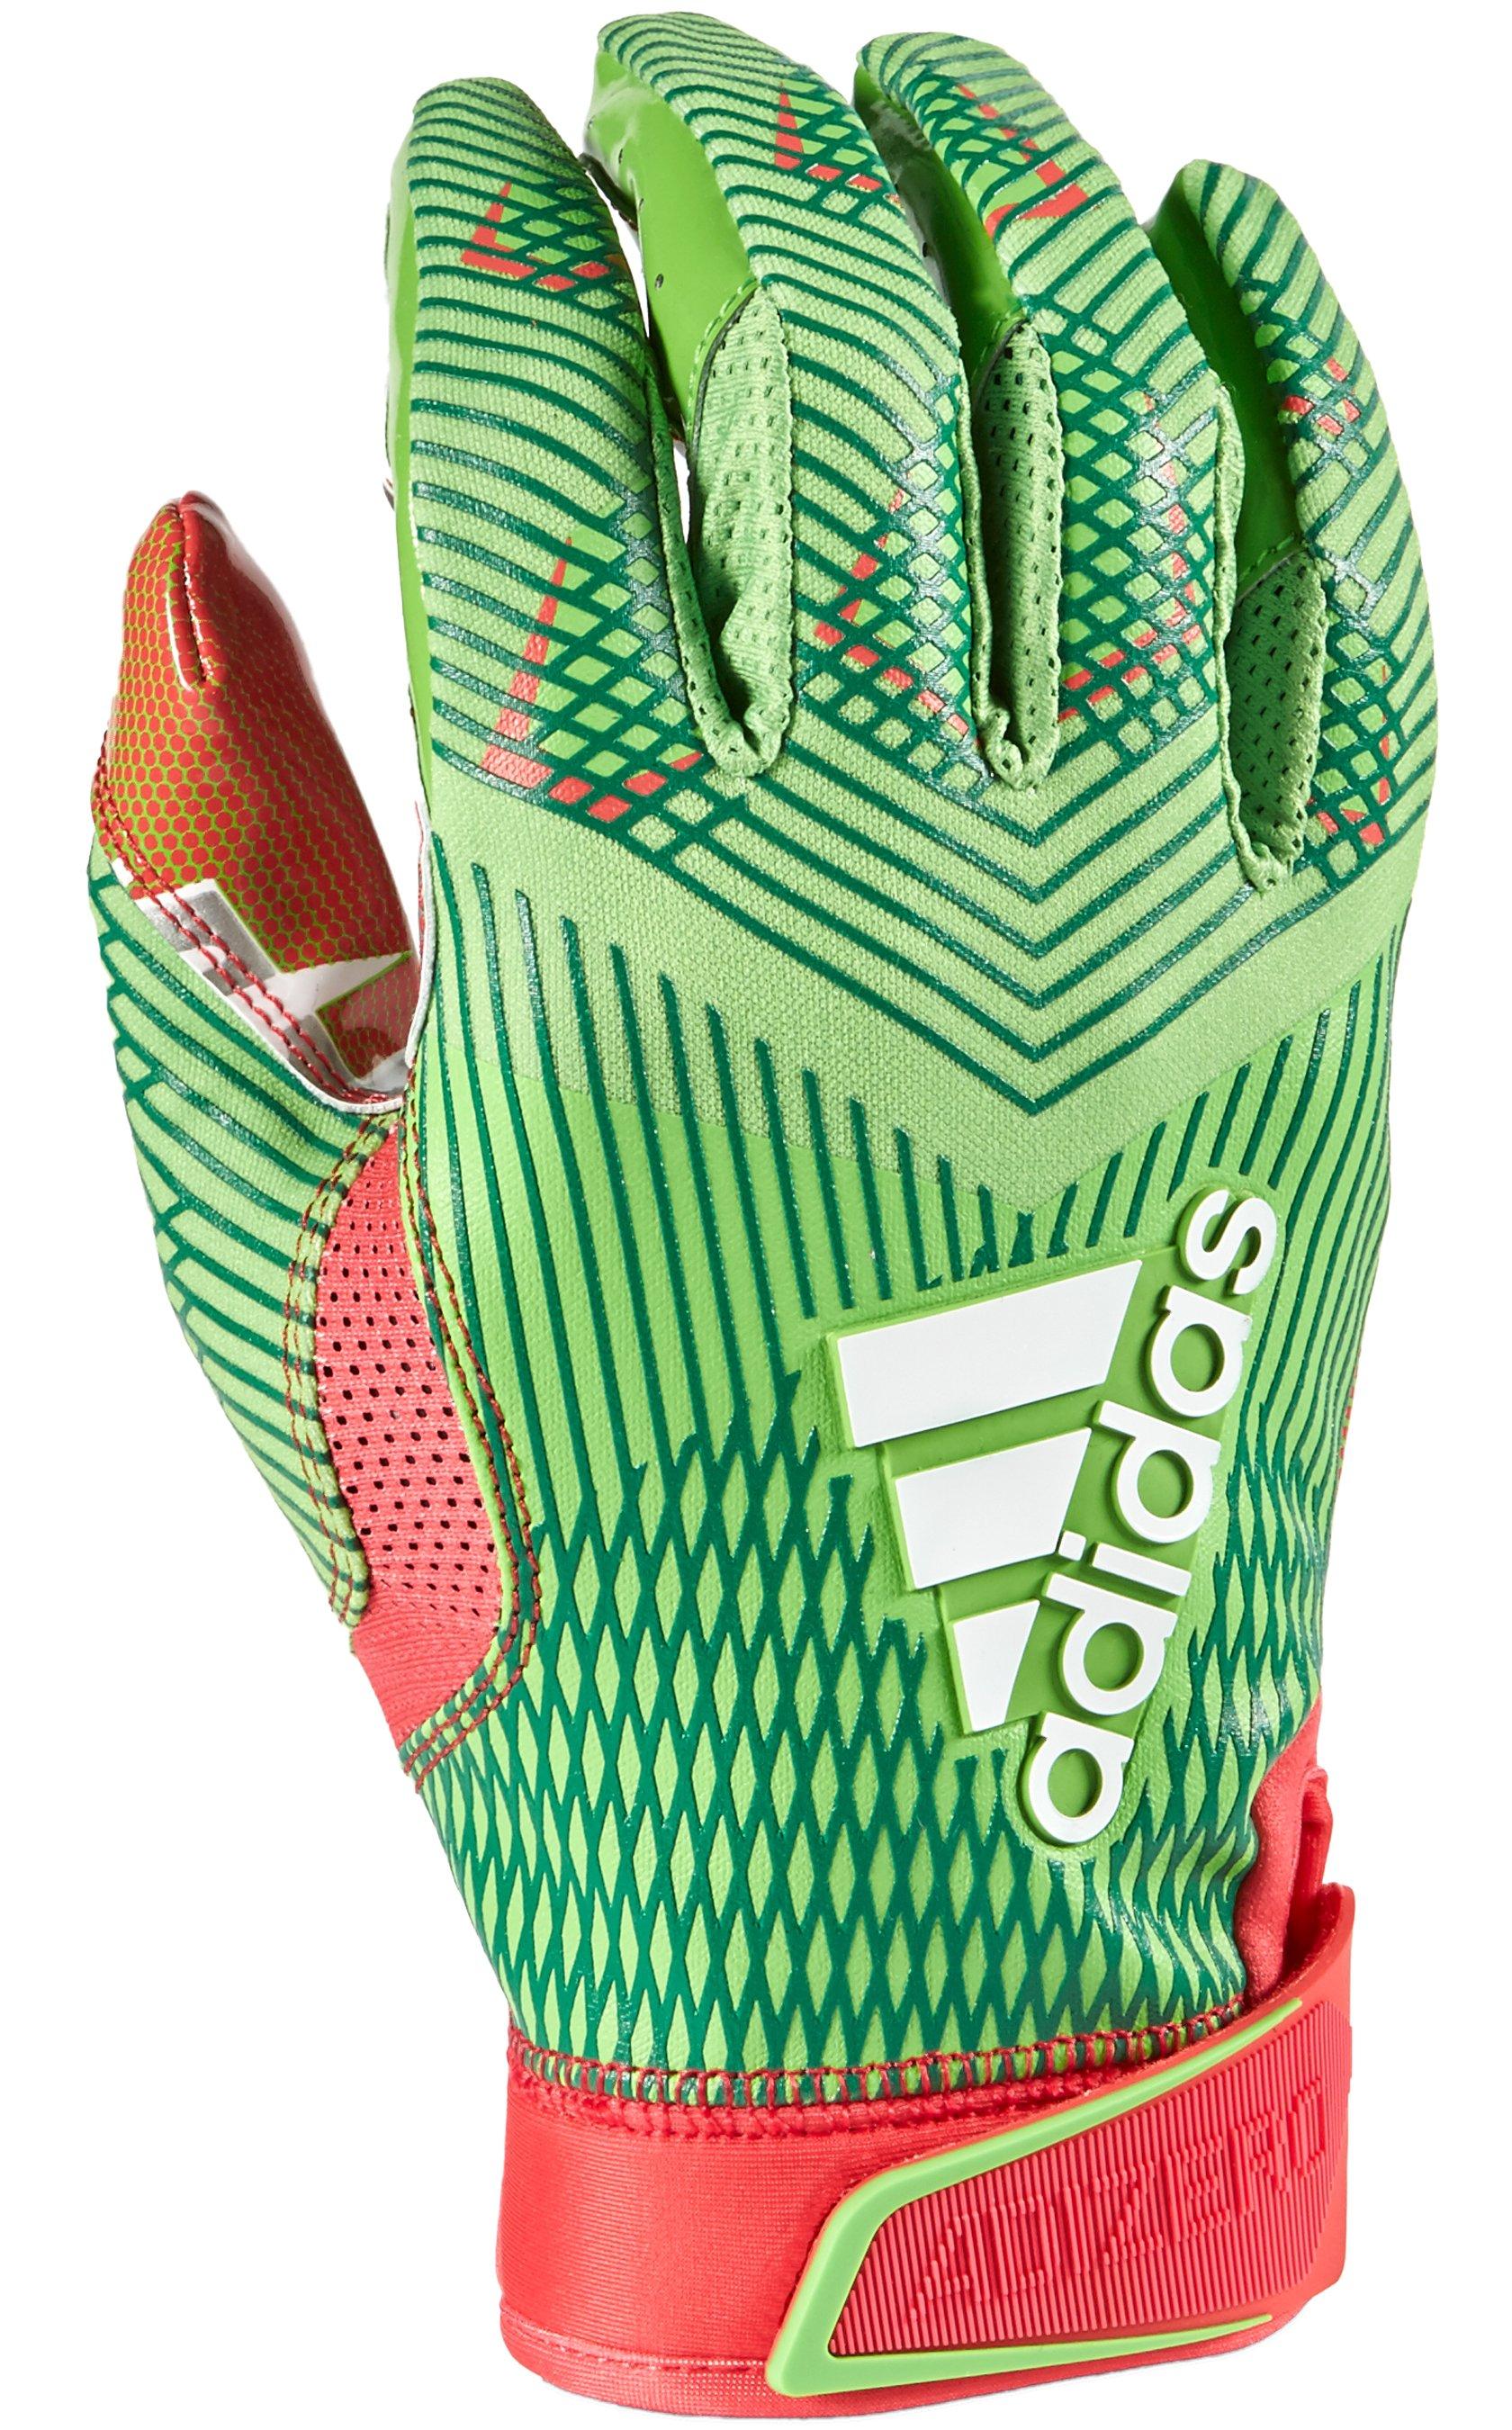 adidas football gloves 8.0